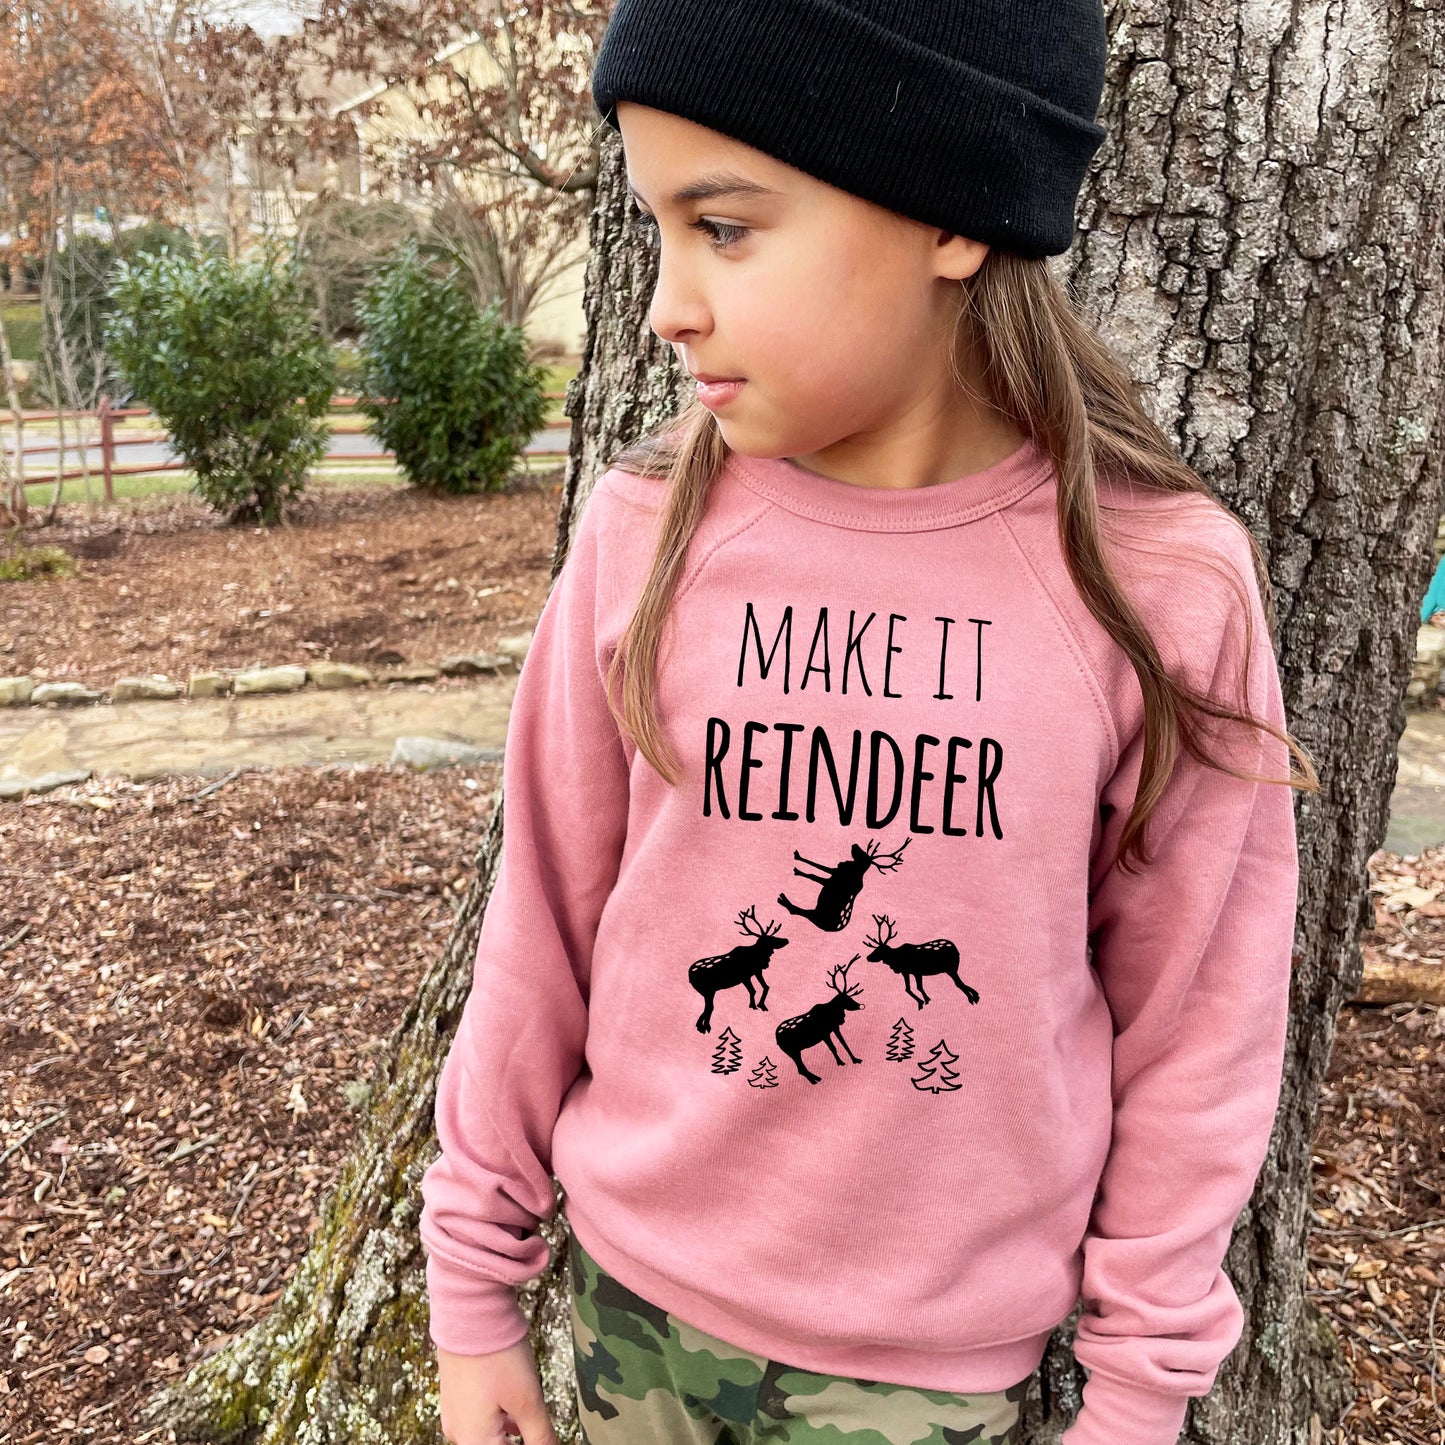 Make It Reindeer - Kid's Sweatshirt - Heather Gray or Mauve